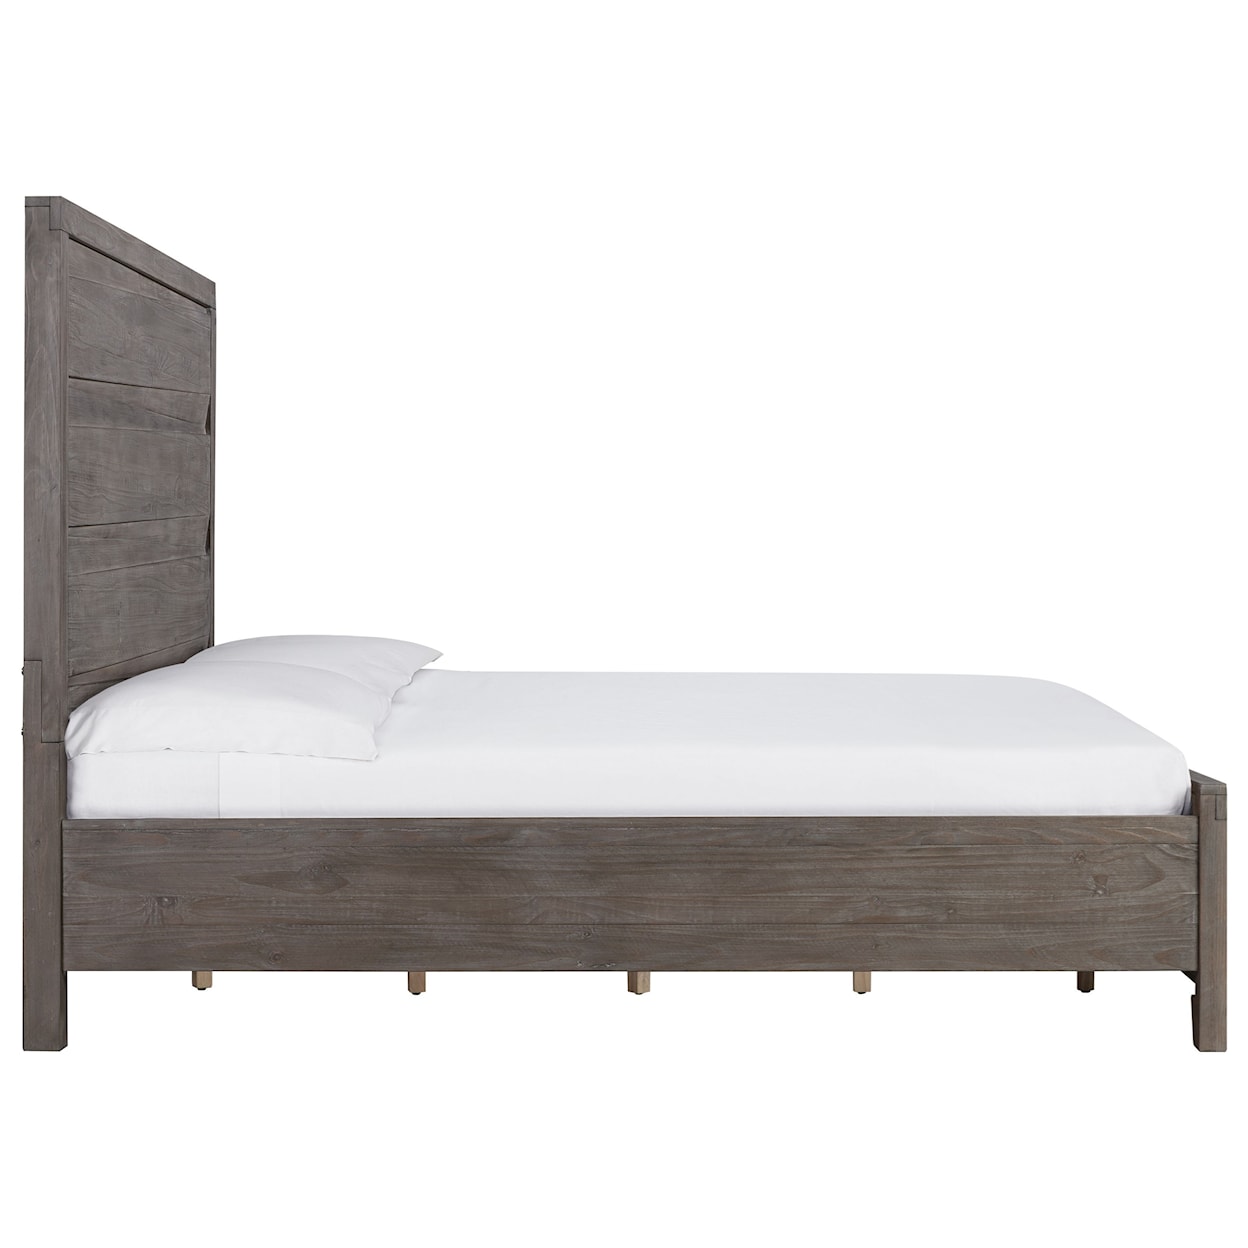 Modus International Hearst Solid Wood Queen Panel Bed